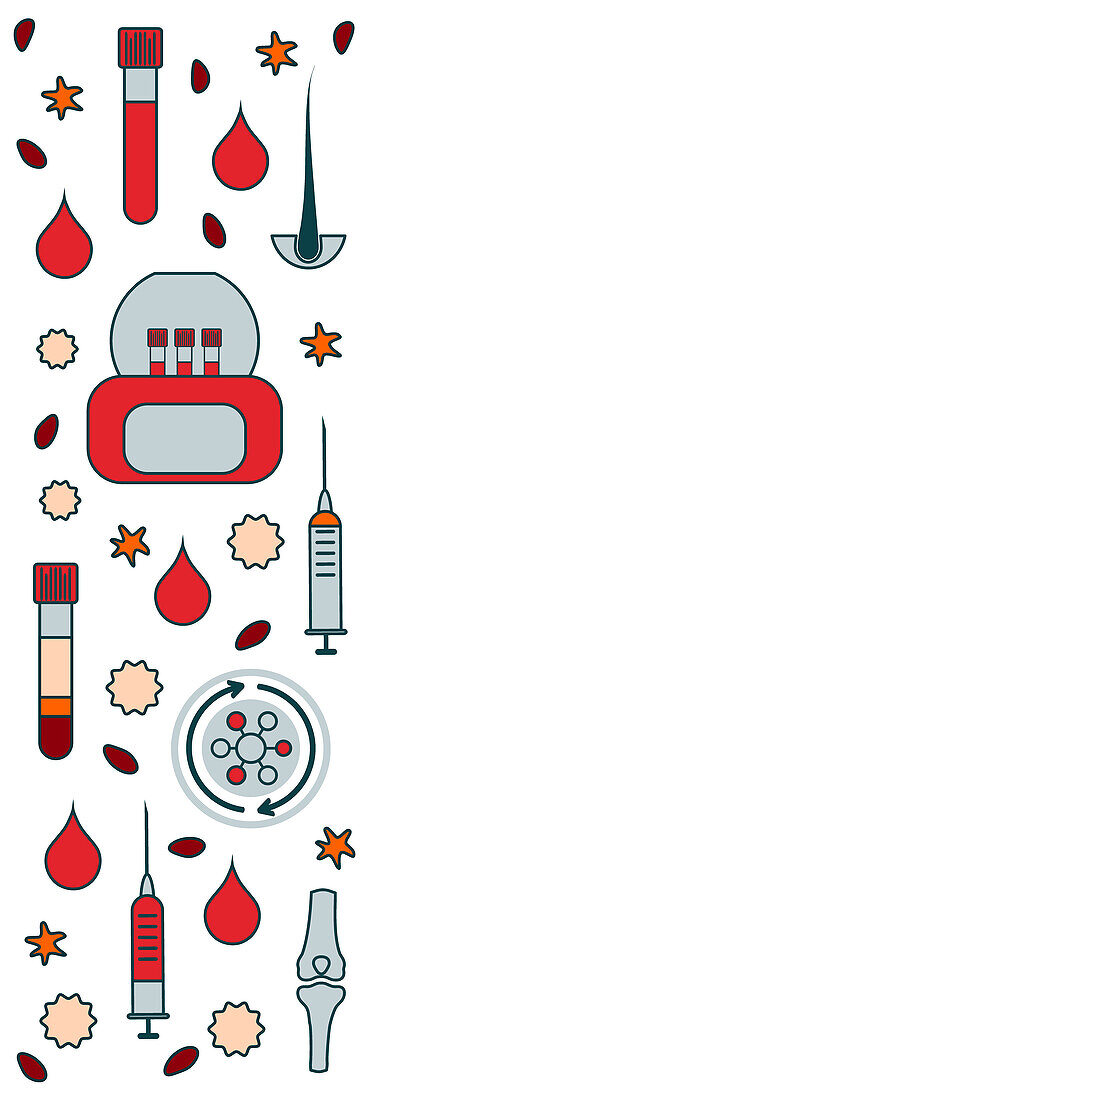 Regenerative medicine, conceptual illustration